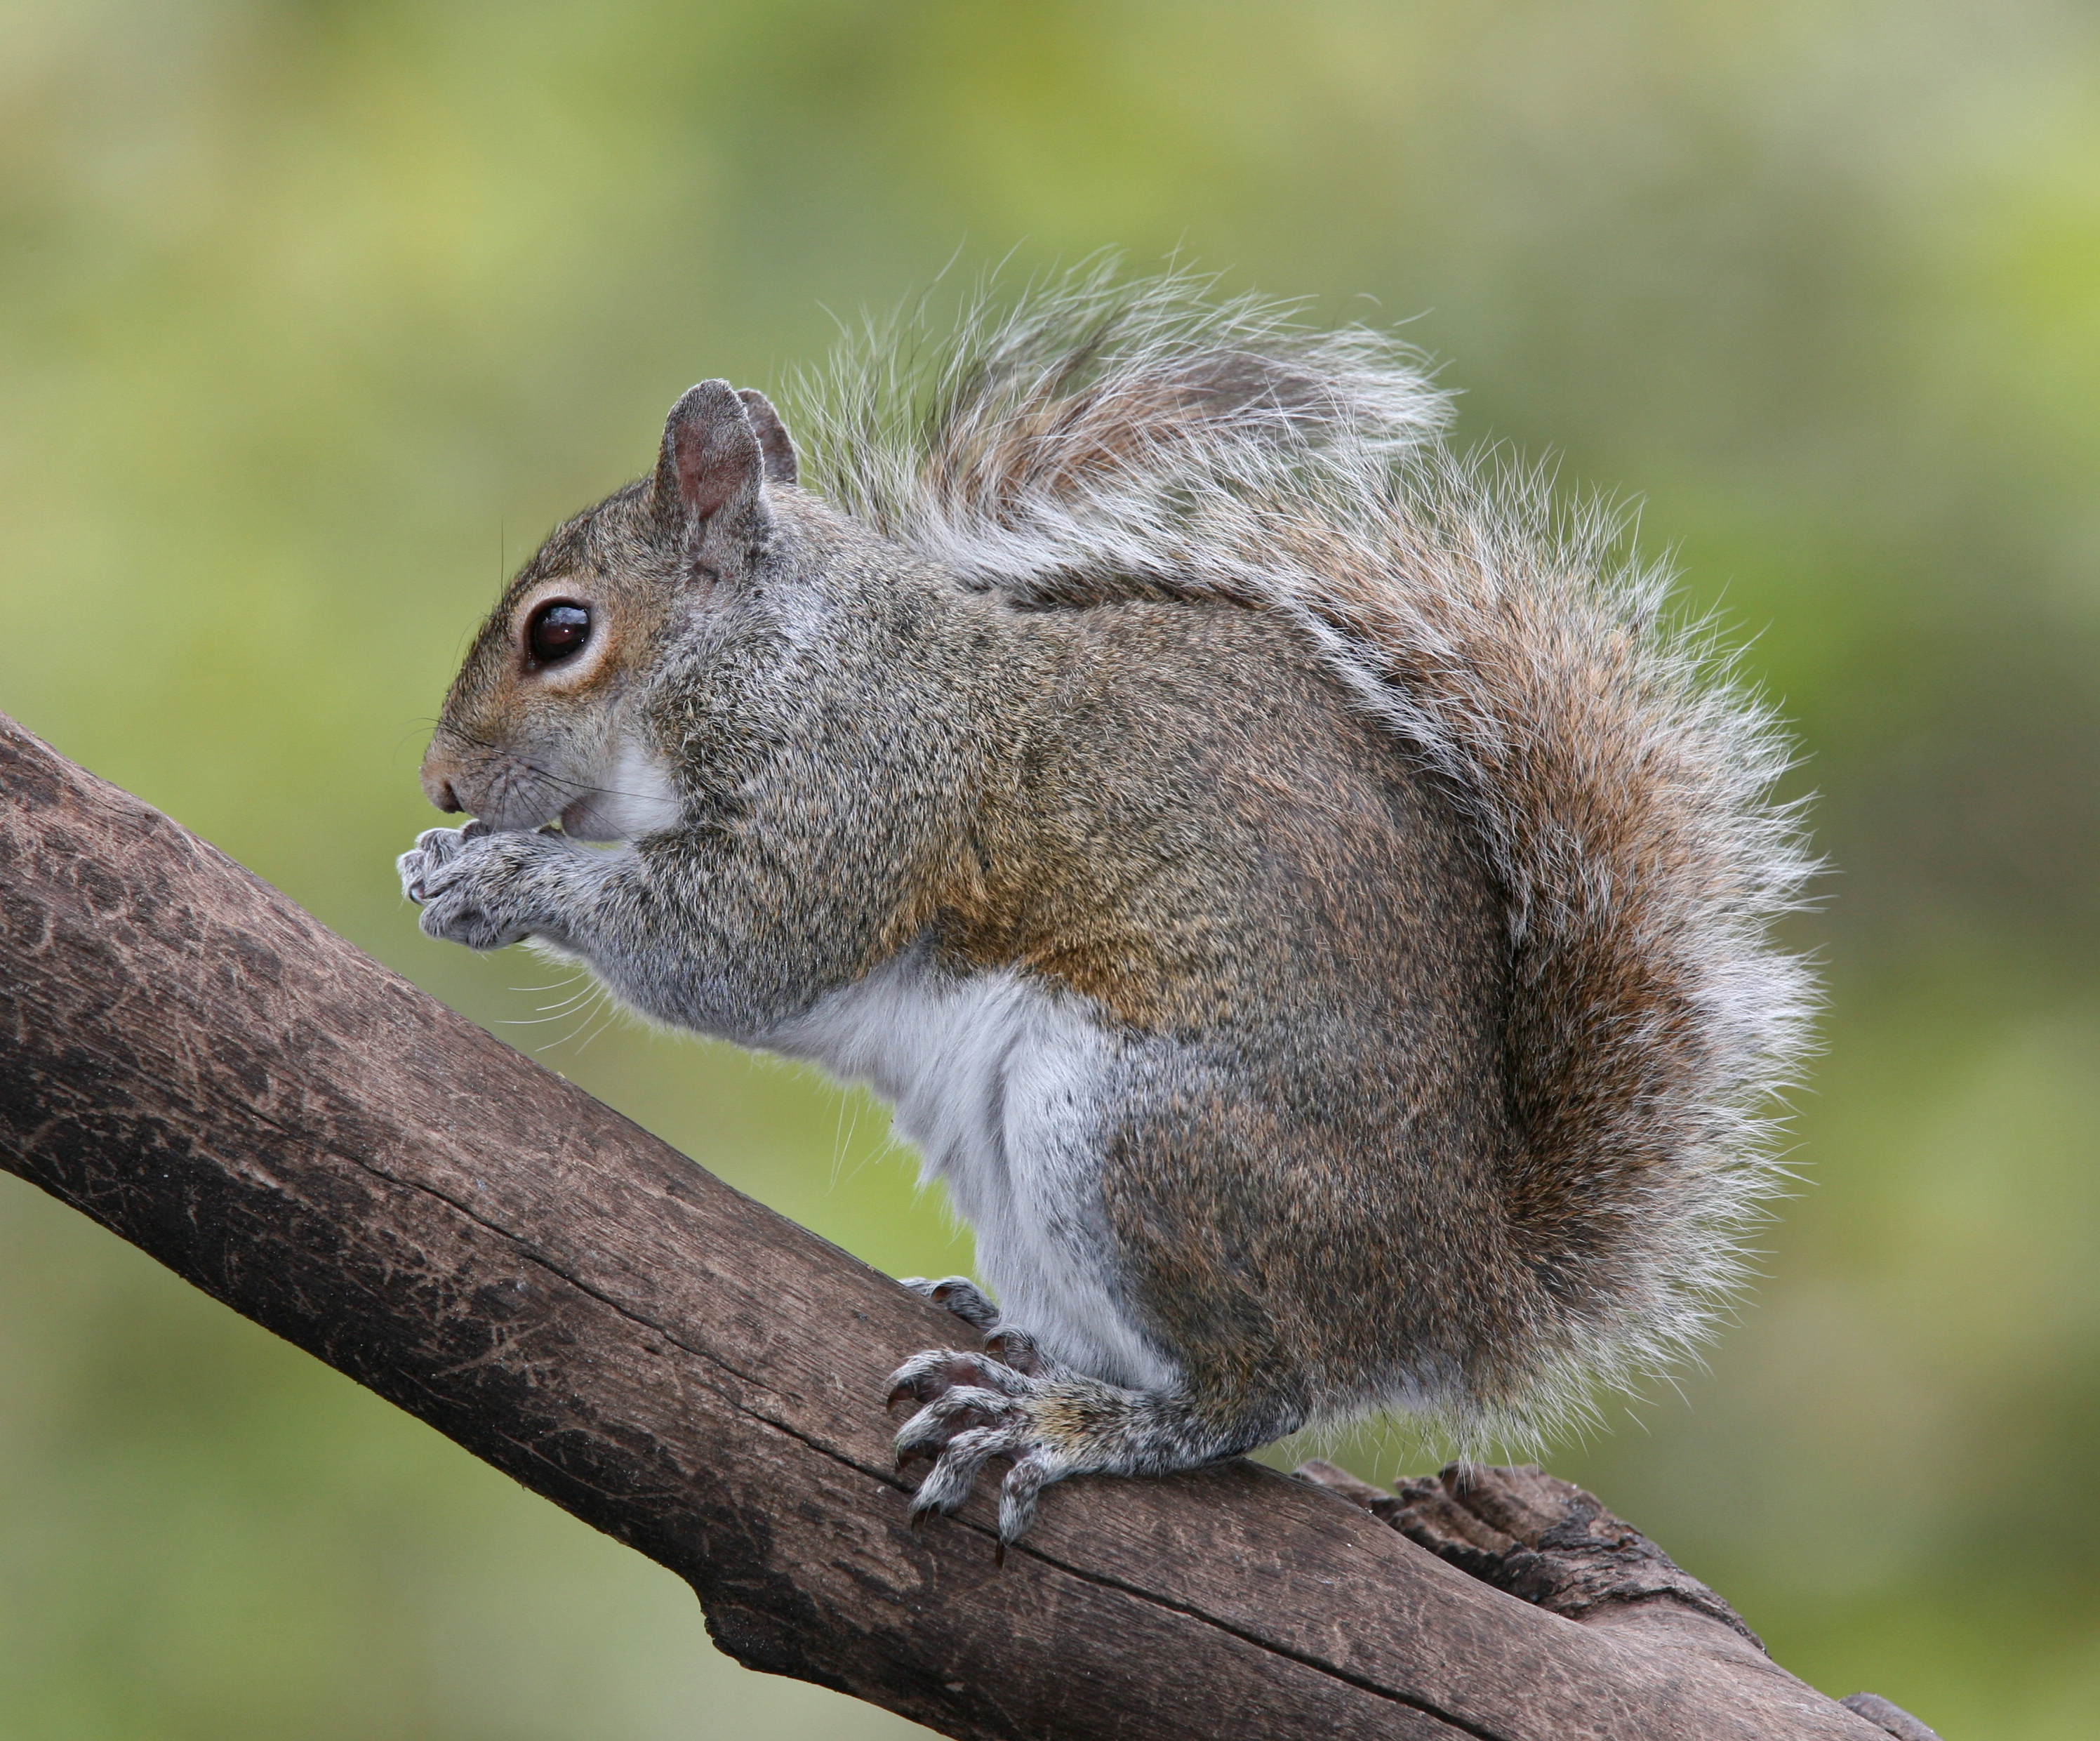 Eastern gray squirrel - Wikipedia